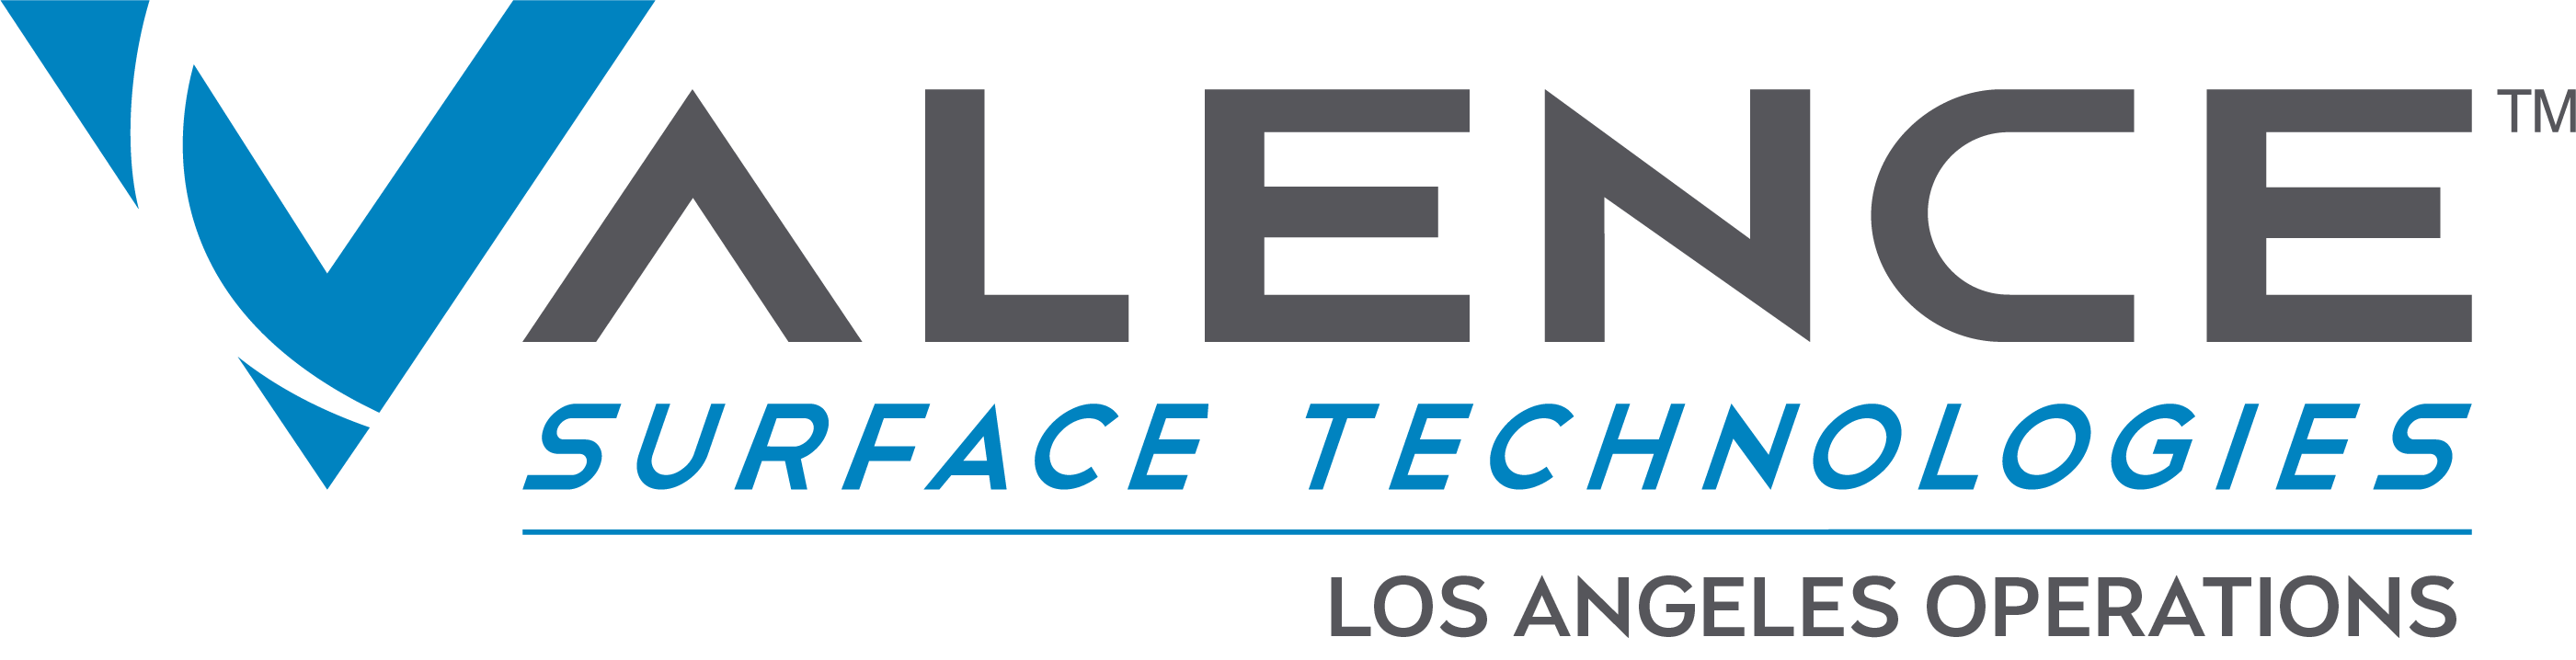 Valence Surface Technologies Los Angeles logo